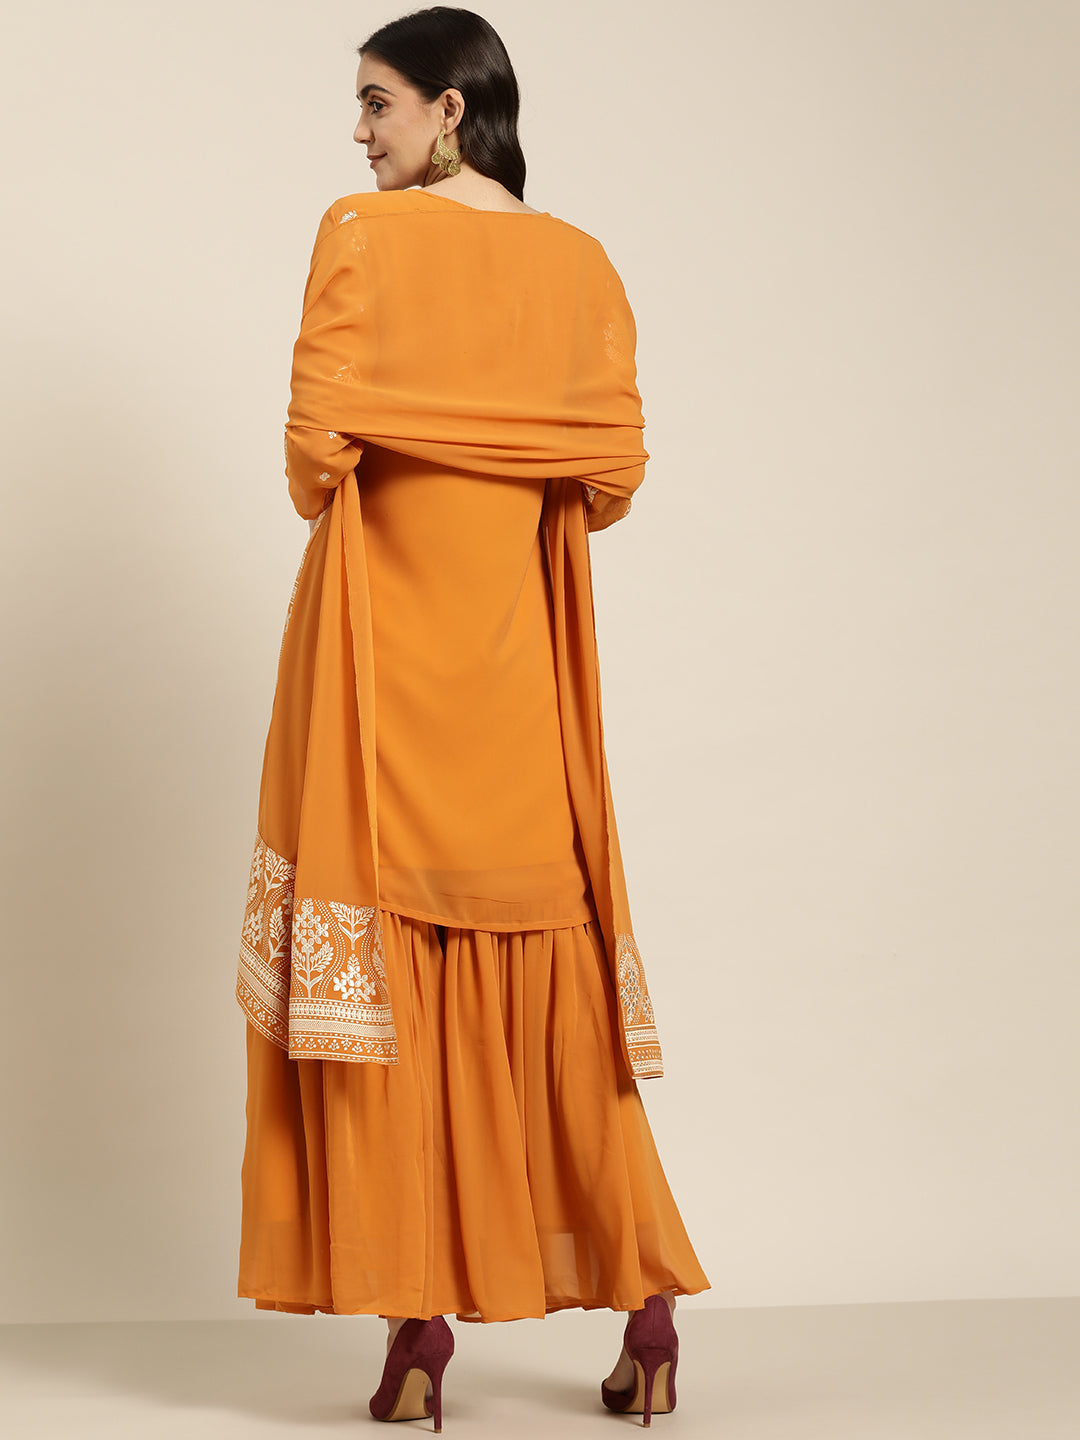 Women's Orange & Silver Ethnic Motifs Foil Printed Straight Kurta Sharara Dupatta ( JOKPS D32O 1444 Orange ) - Jompers